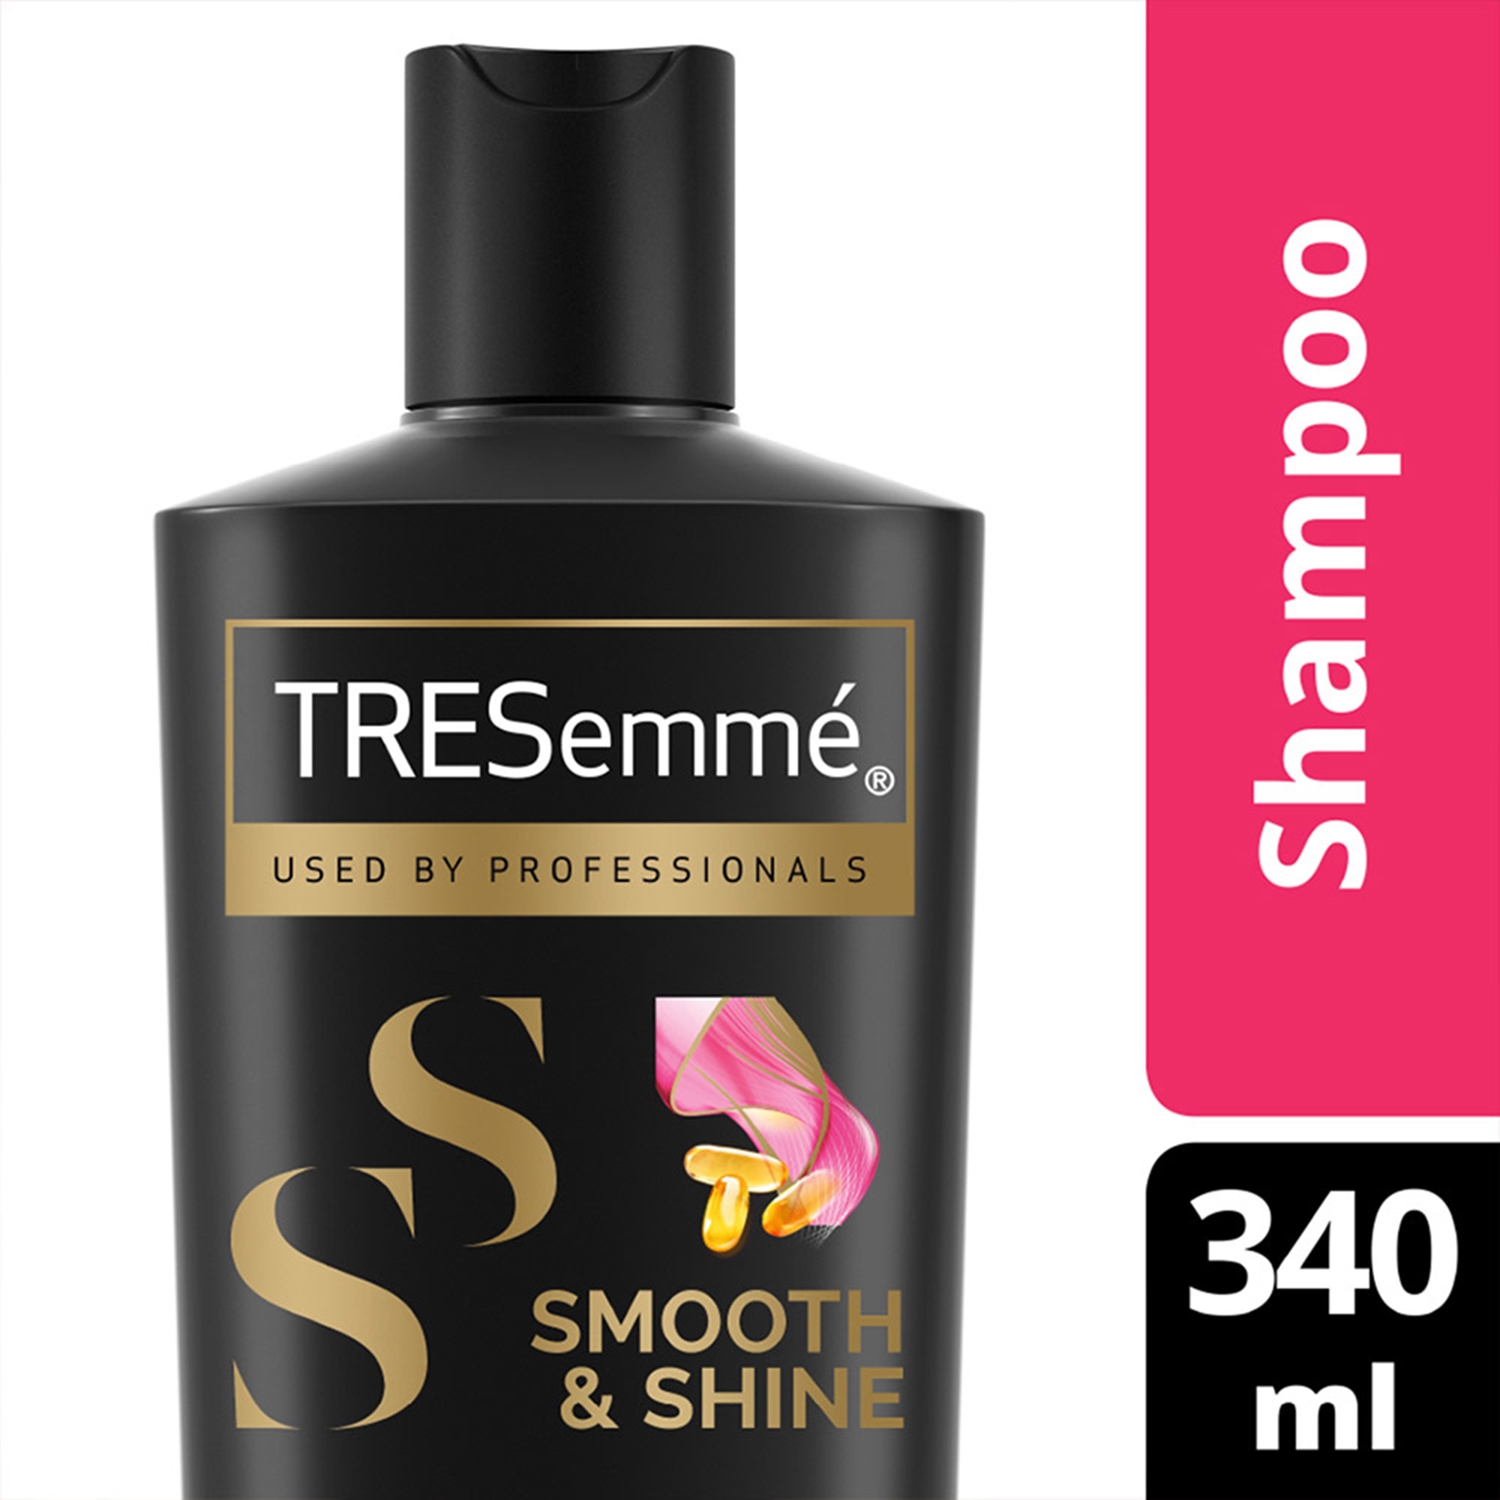 Tresemme | Tresemme Smooth & Shine Shampoo - (340ml)